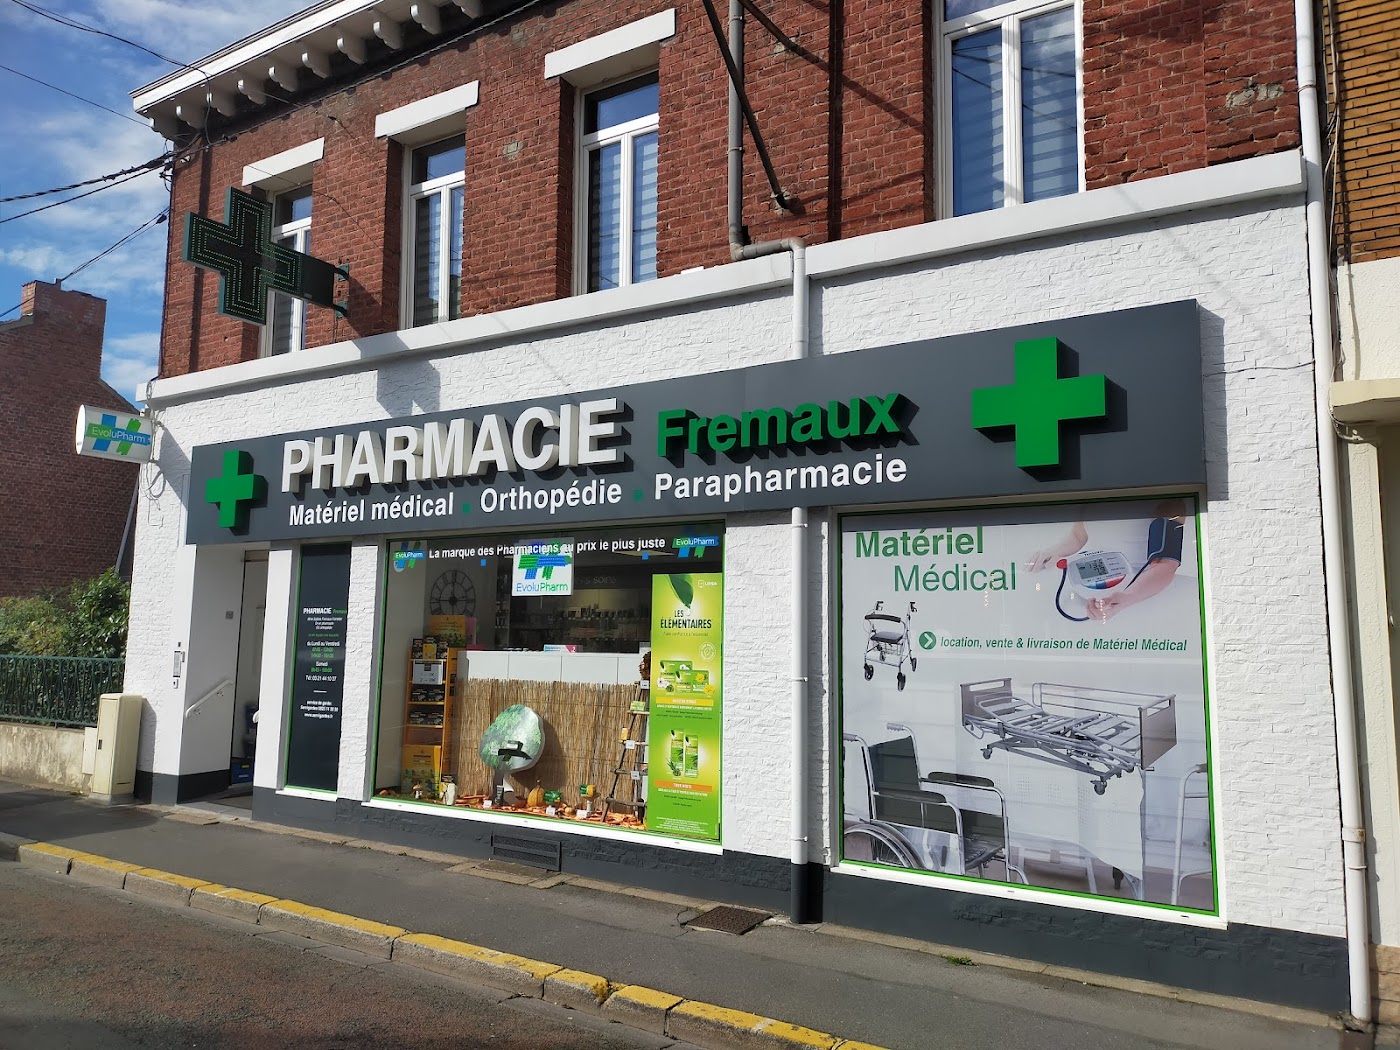 Pharmacie Fremaux